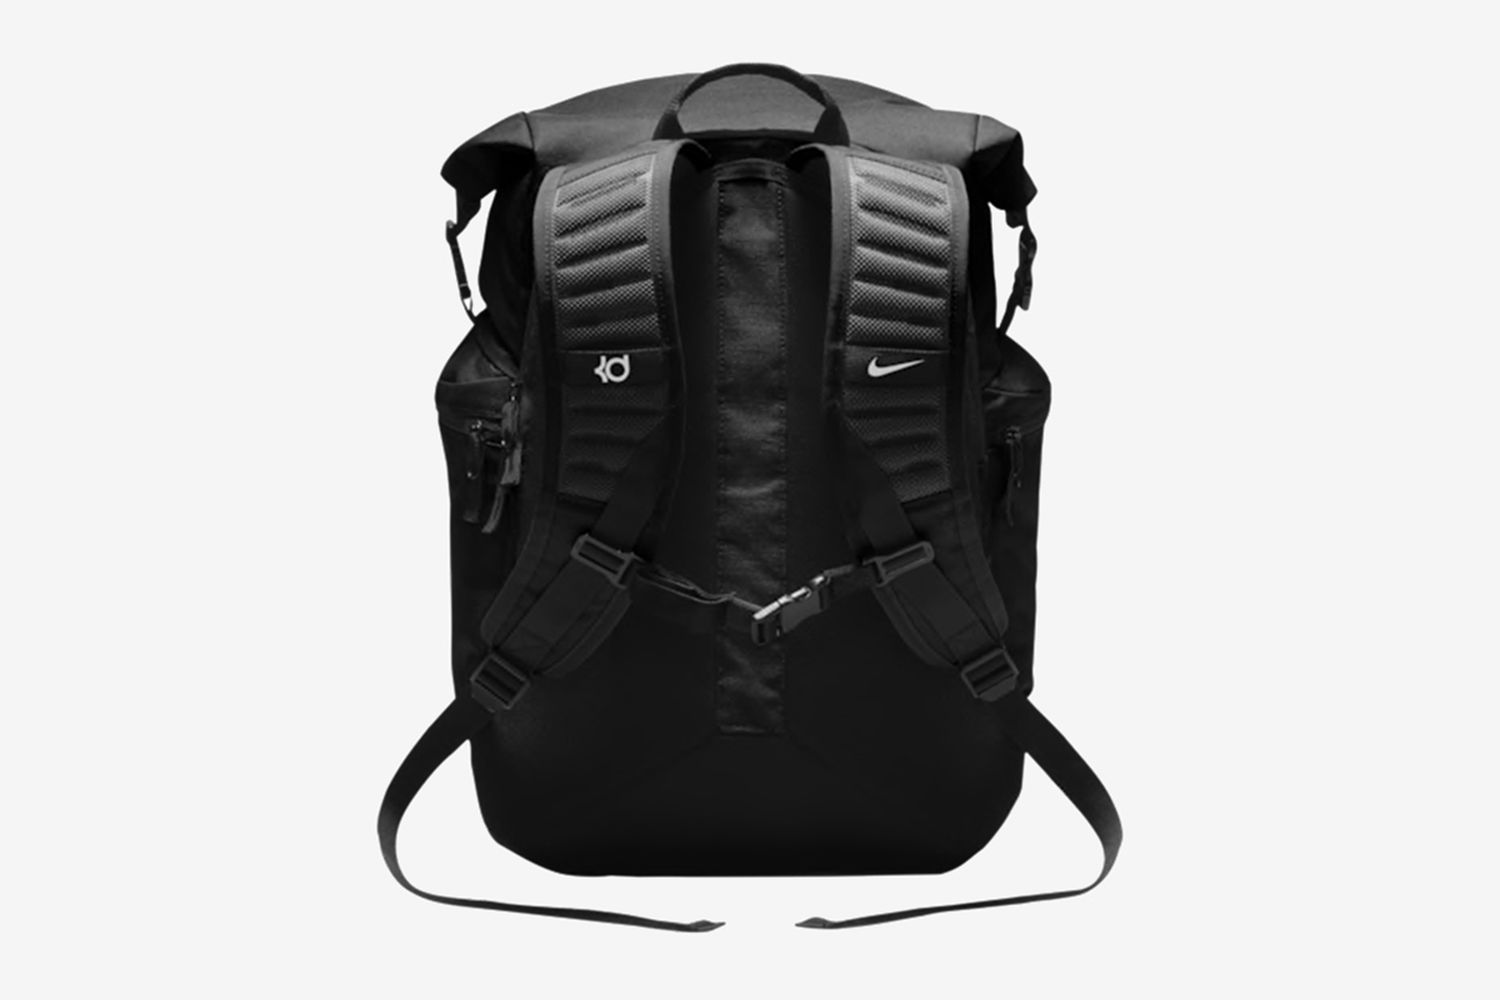 KD Trey 5 Backpack